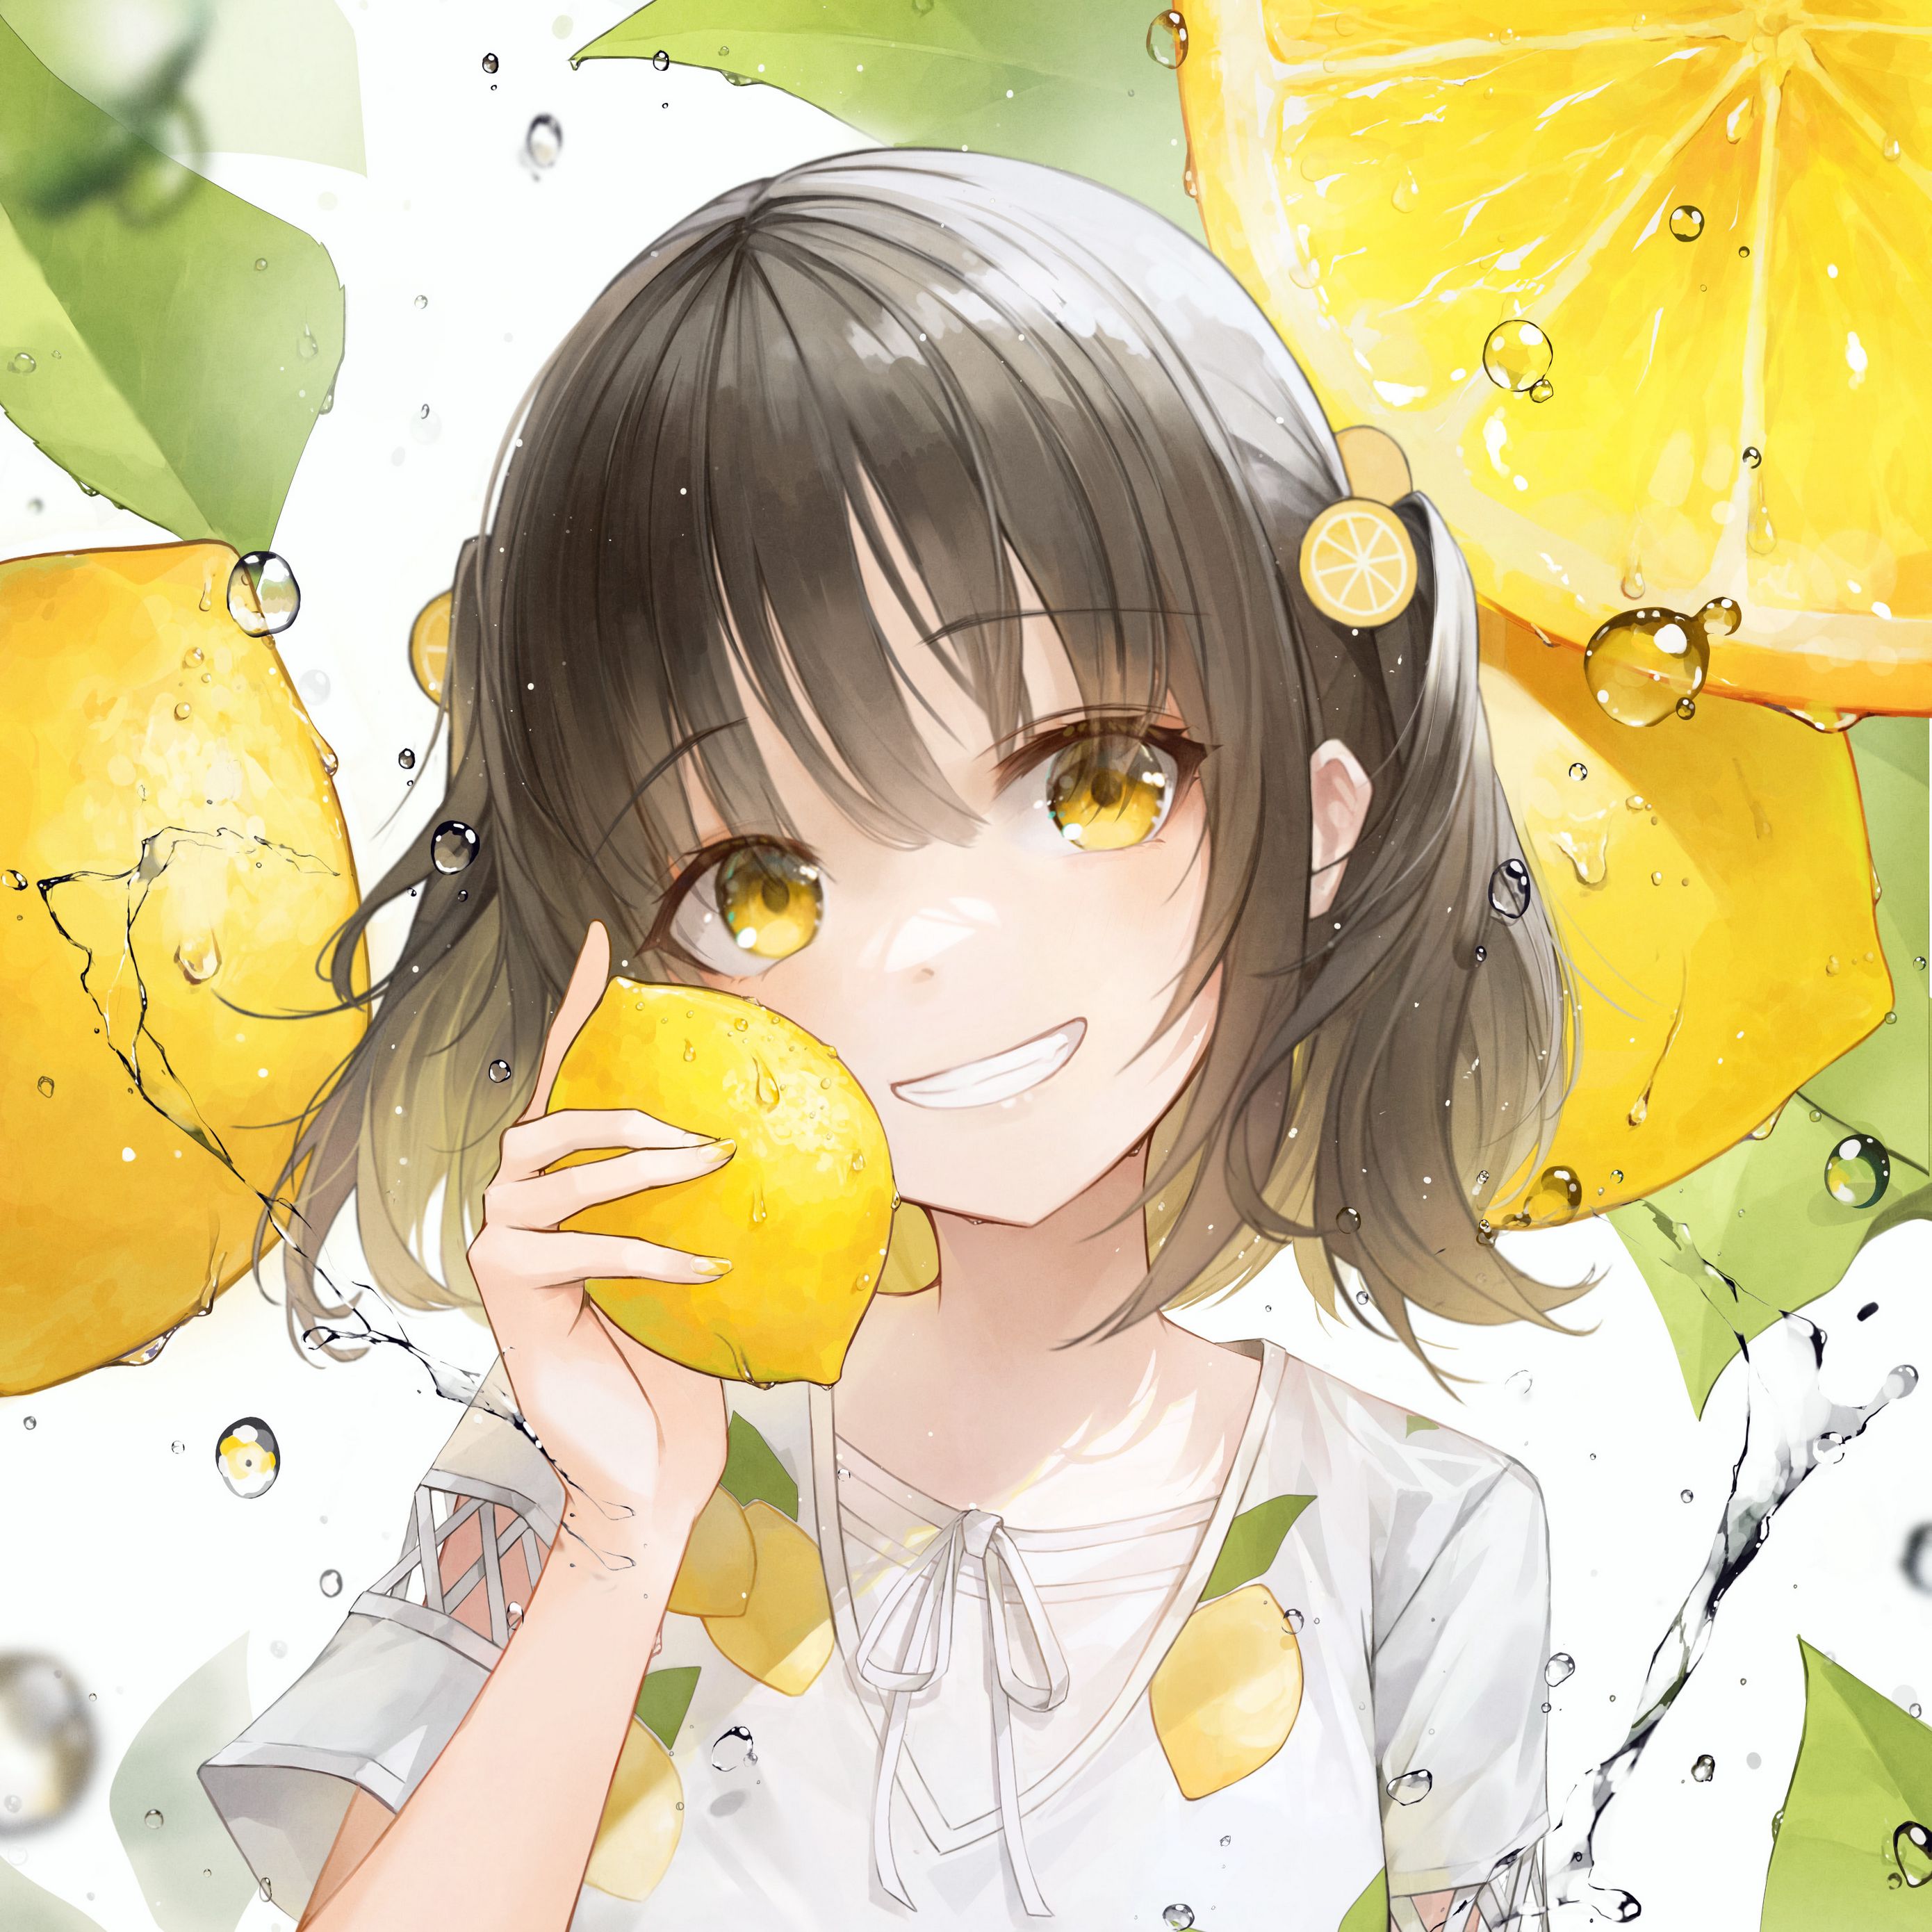 Download Wallpaper 2780x2780 Girl Smile Lemons Lemonade Drops Yellow Anime Ipad Air Ipad Air 2 Ipad 3 Ipad 4 Ipad Mini 2 Ipad Mini 3 Ipad Mini 4 Ipad Pro 9 7 For Parallax Hd Background